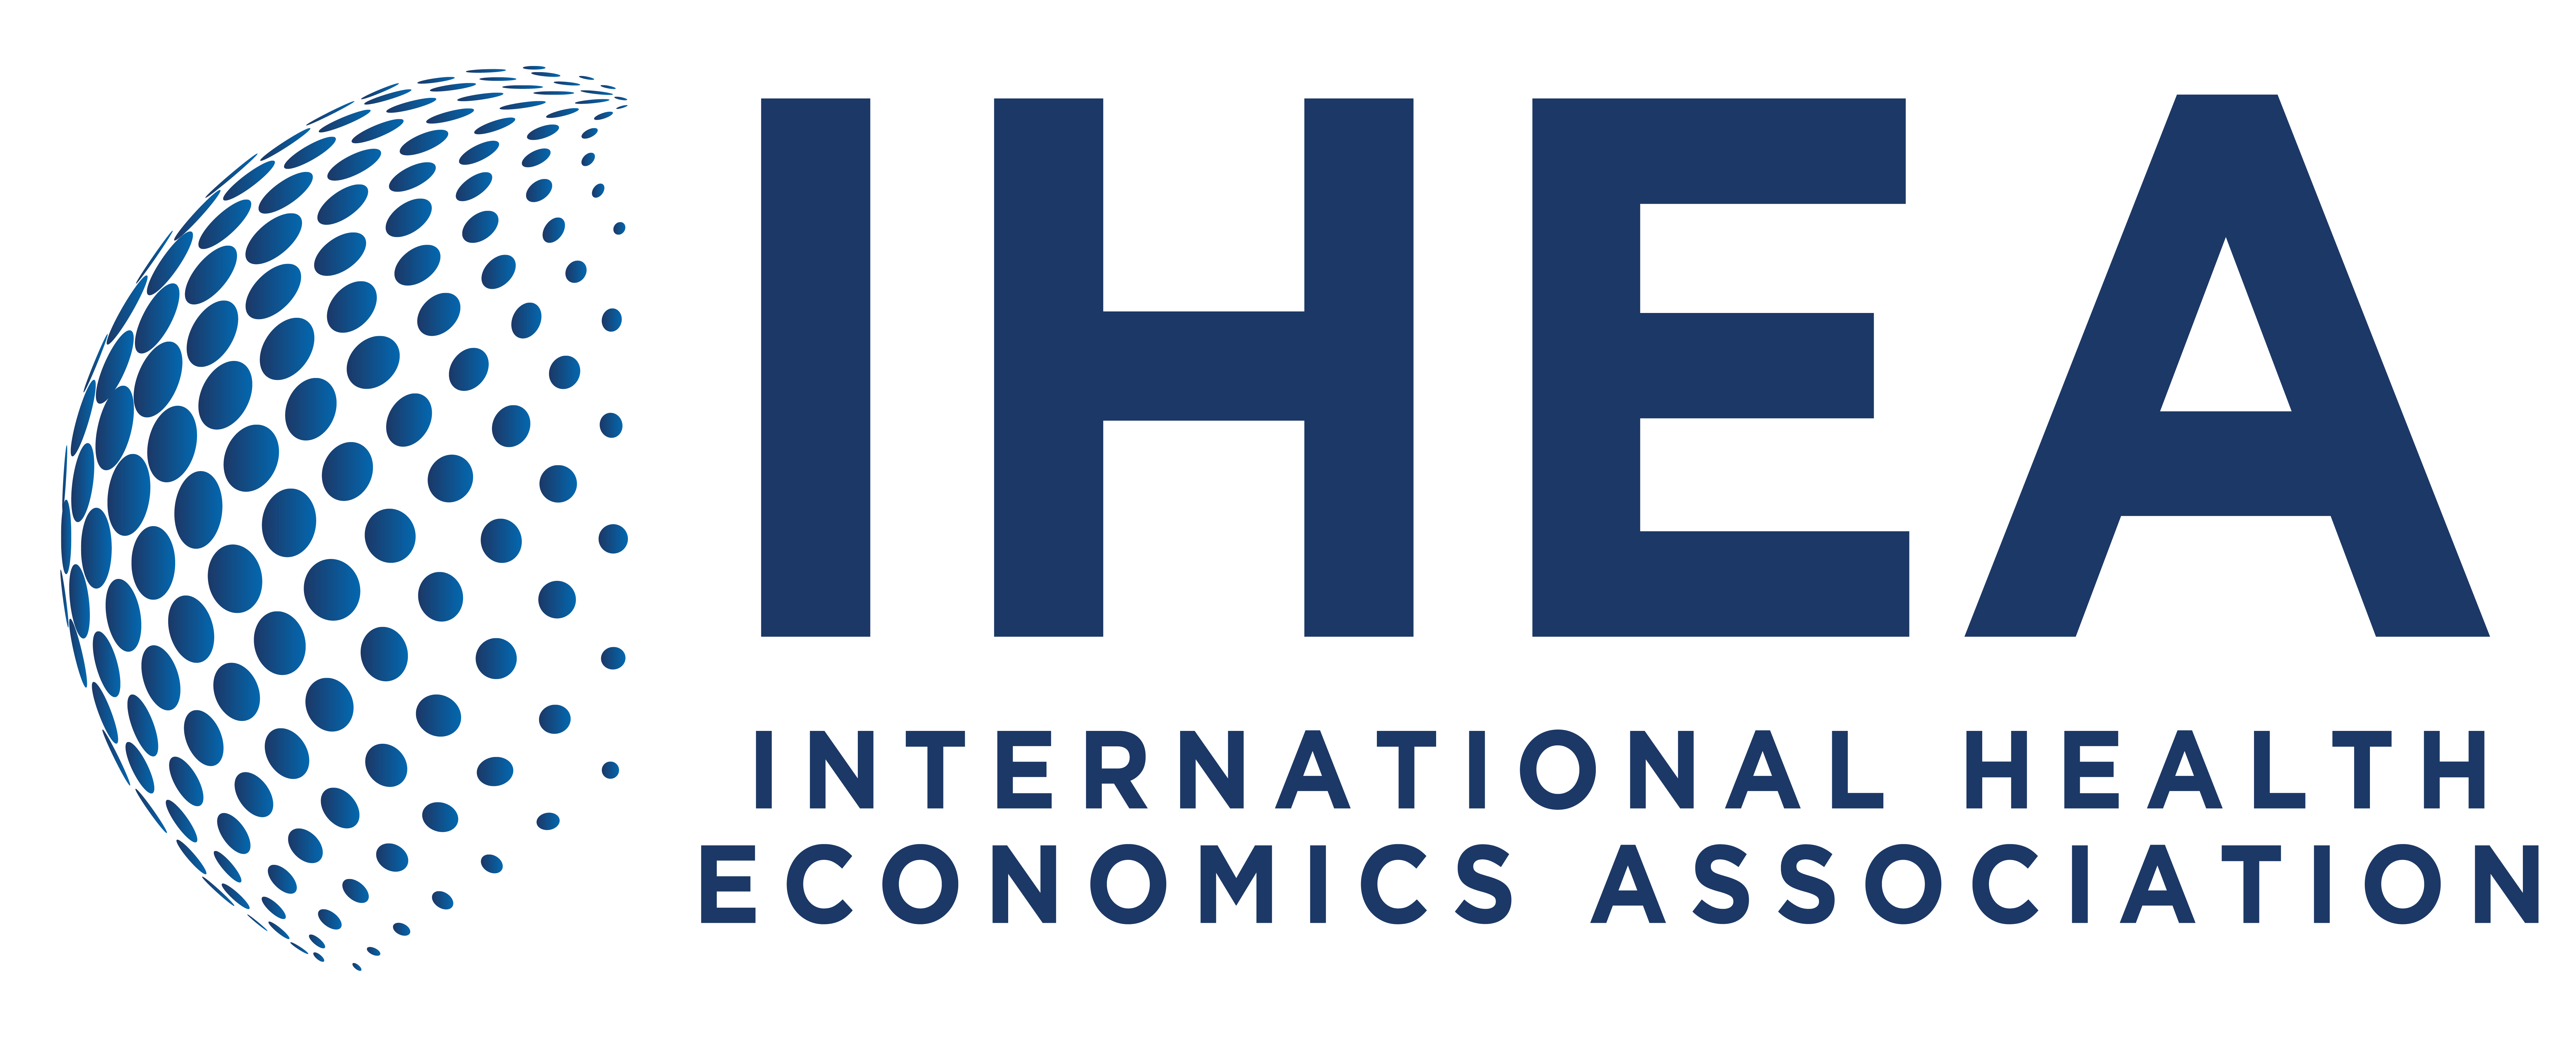 International Health Economics Association